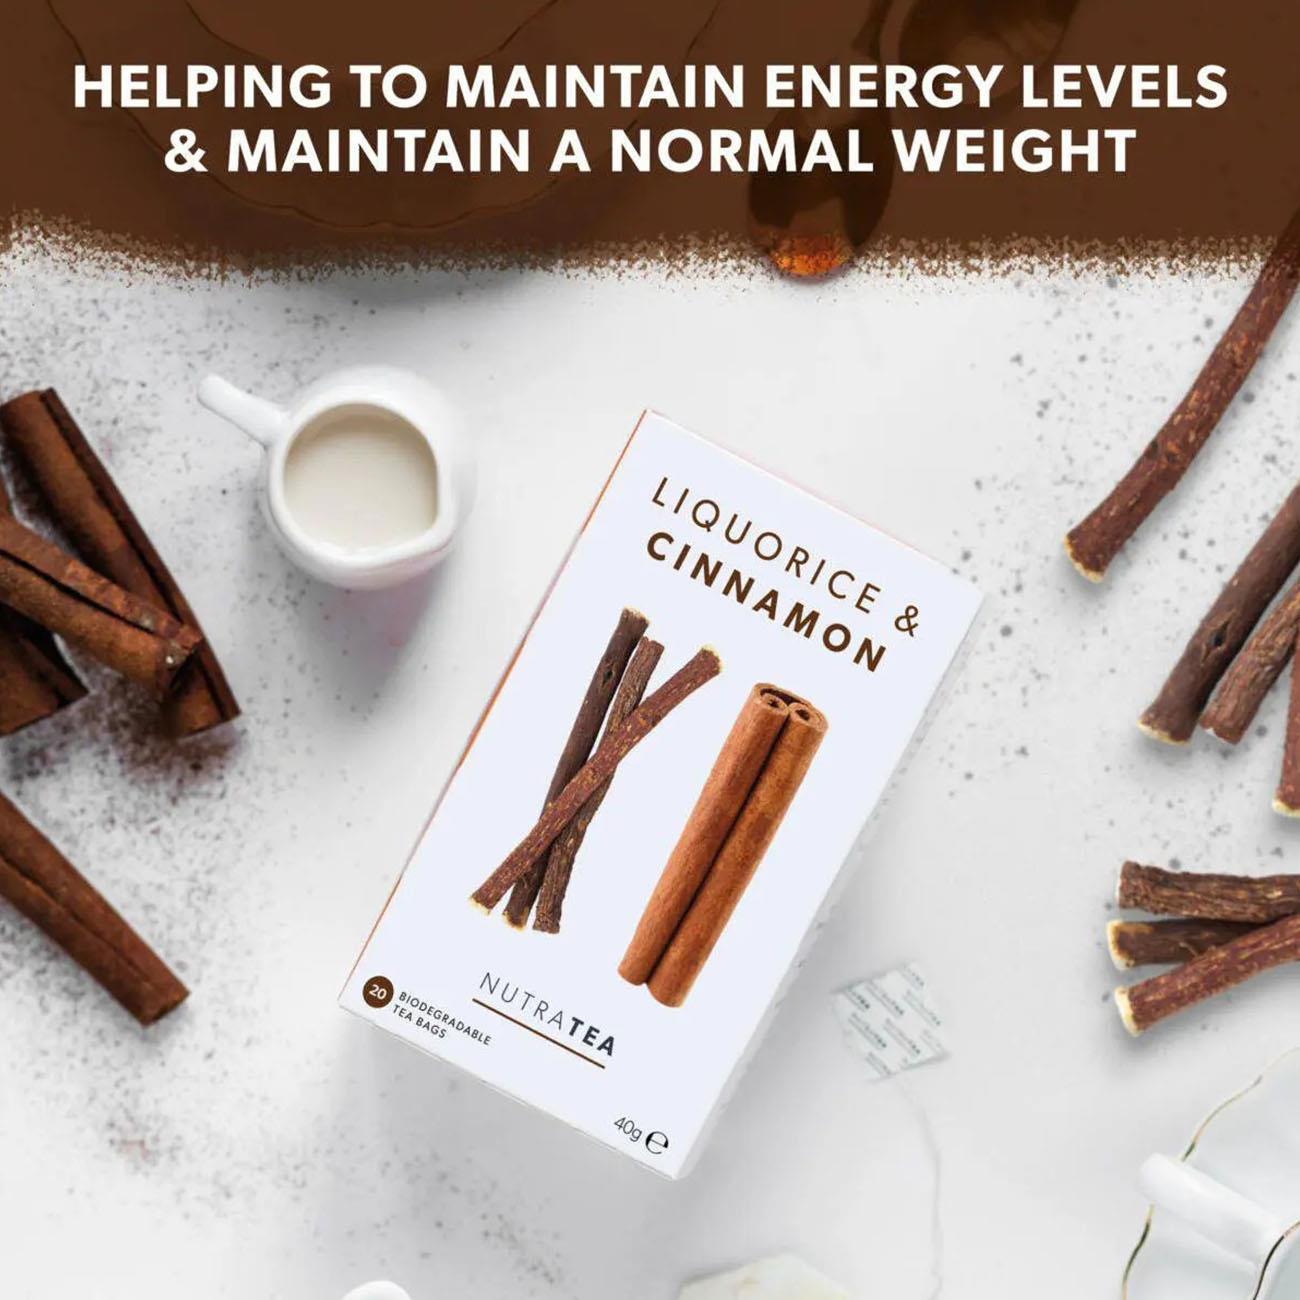 Nutratea Nutra Liquorice & Cinnamon Herbal Tea 20bags